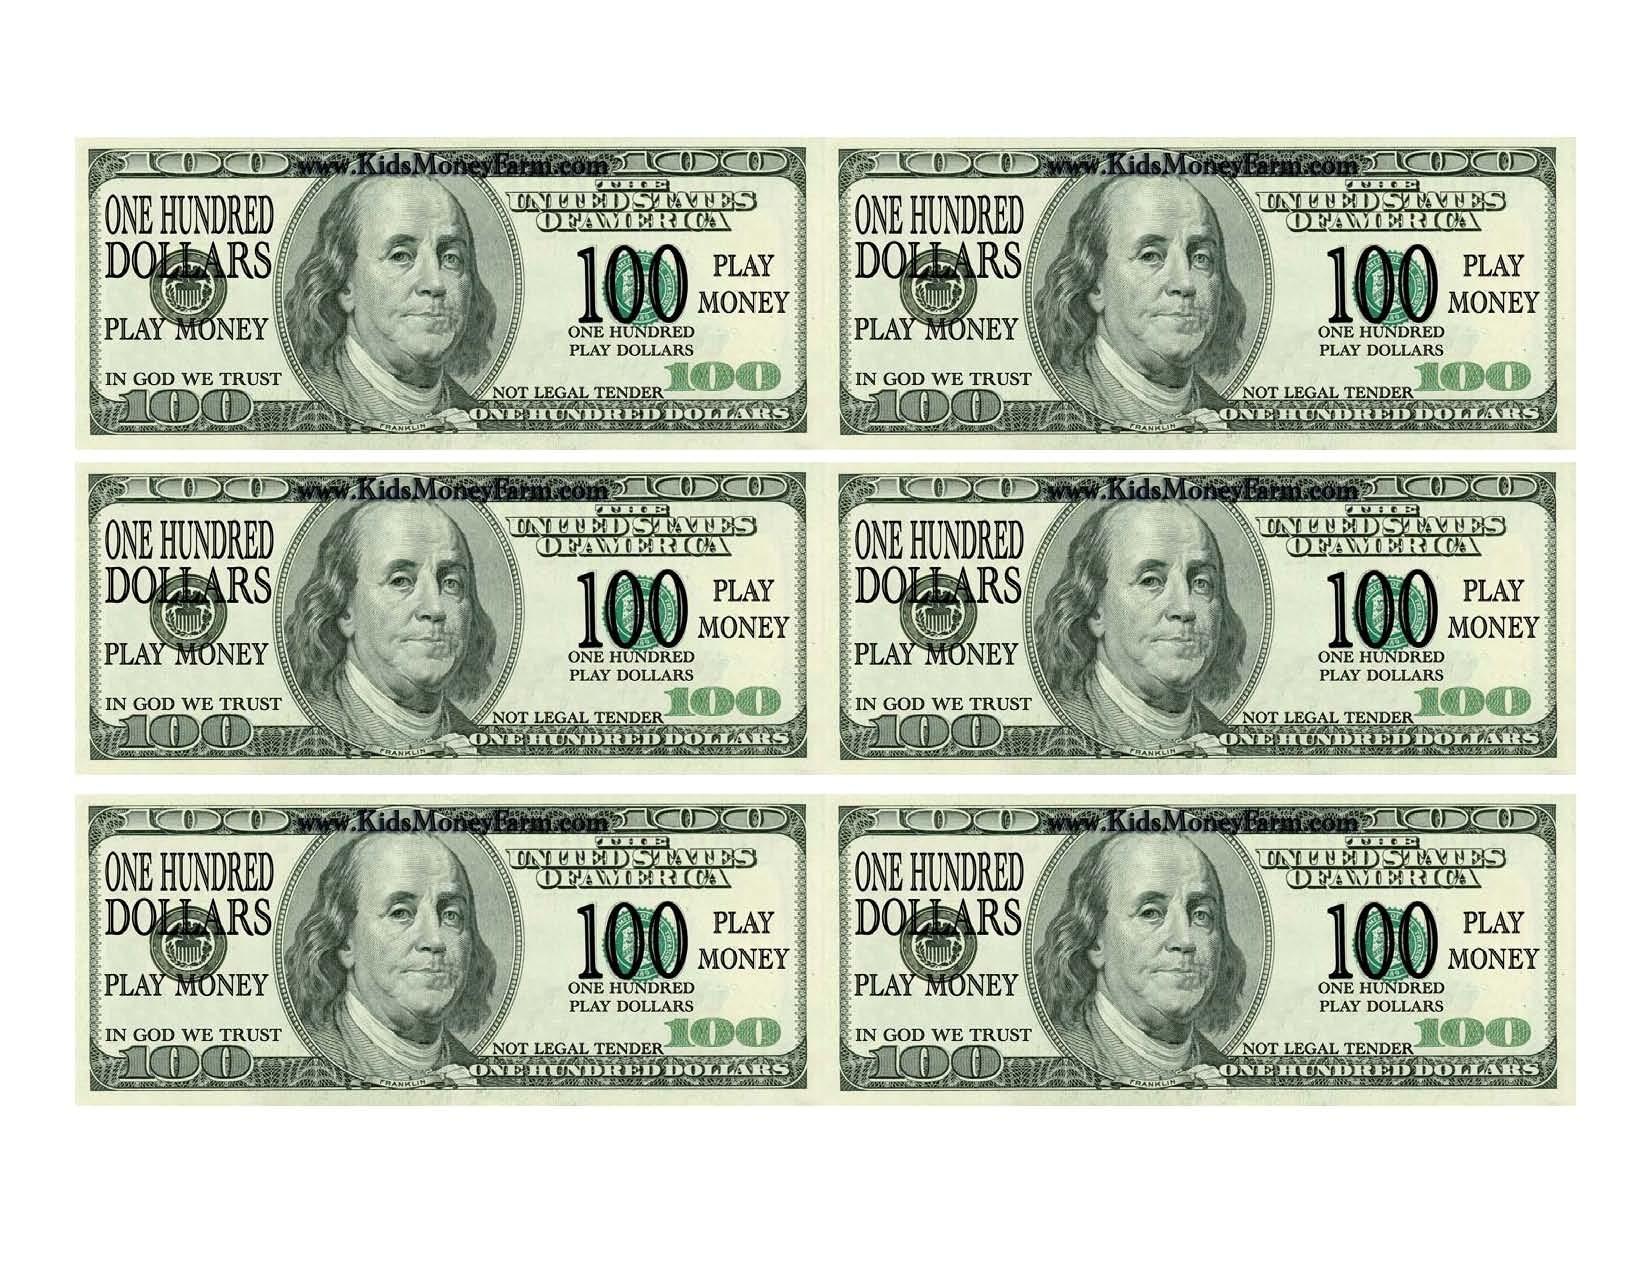 Bible Bucks Play Money Template Kidsmoneyfarm Free Templates - Free Printable Fake Money That Looks Real